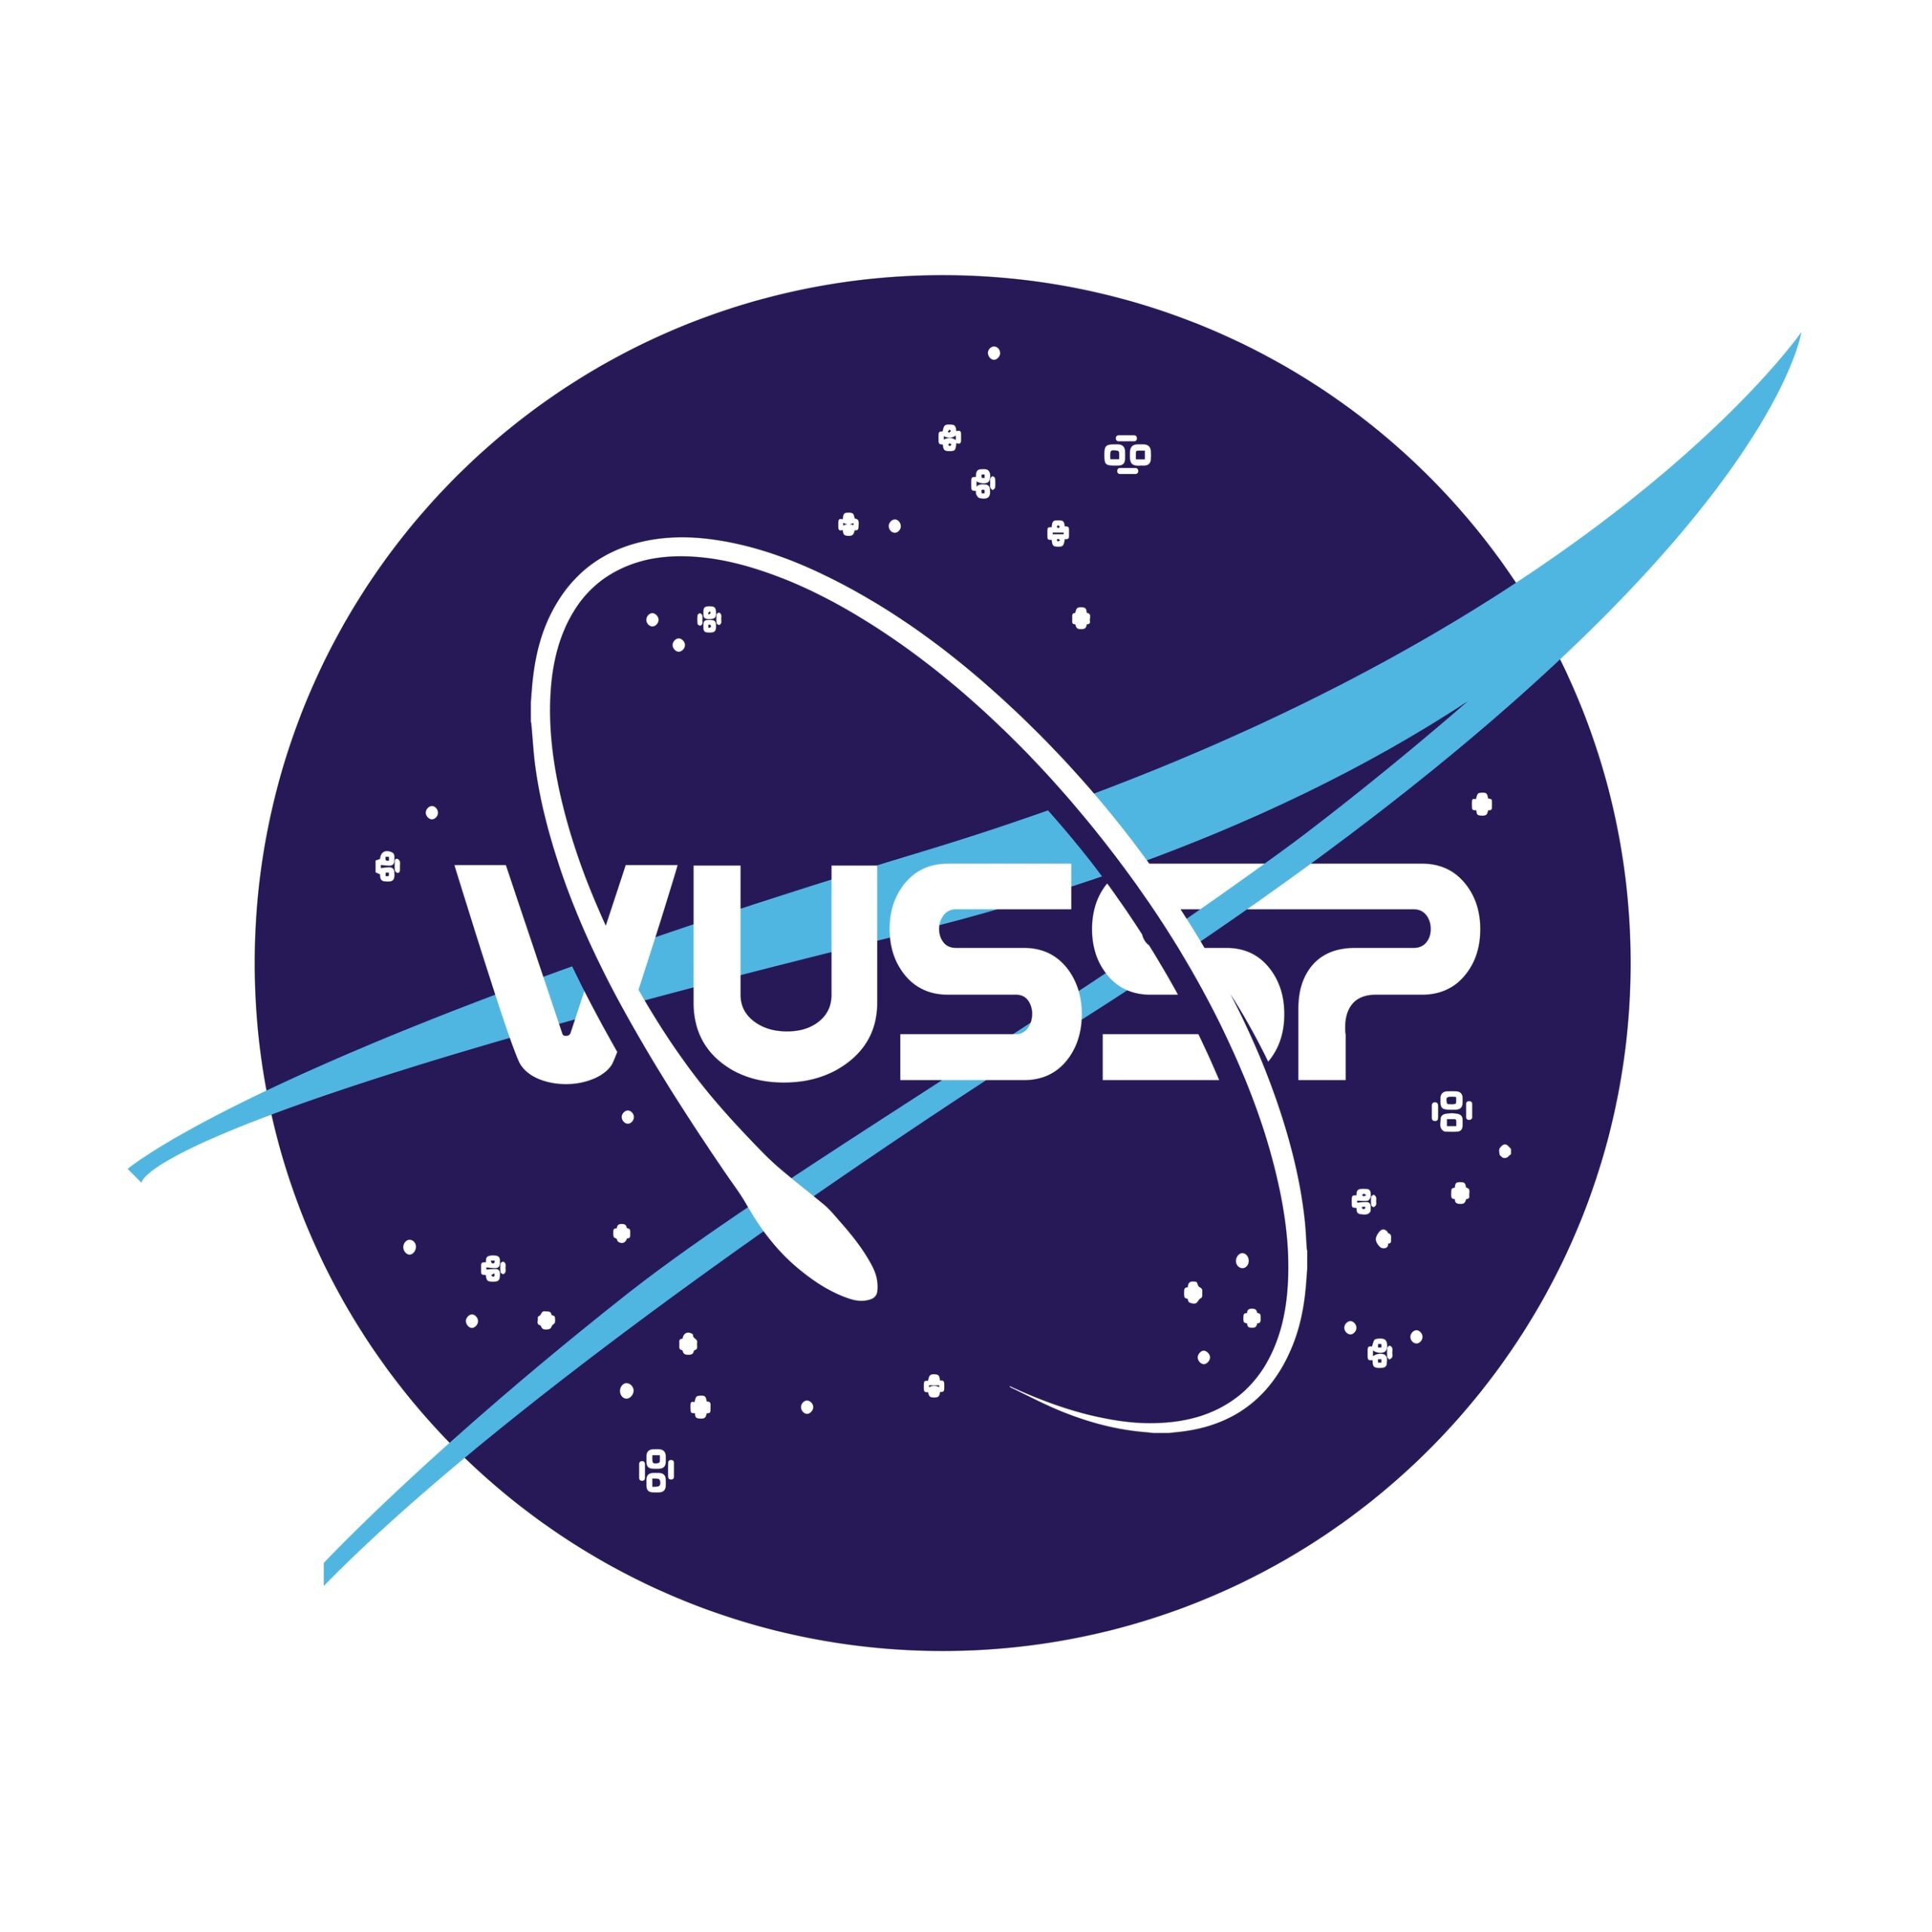 VUSSP - logo